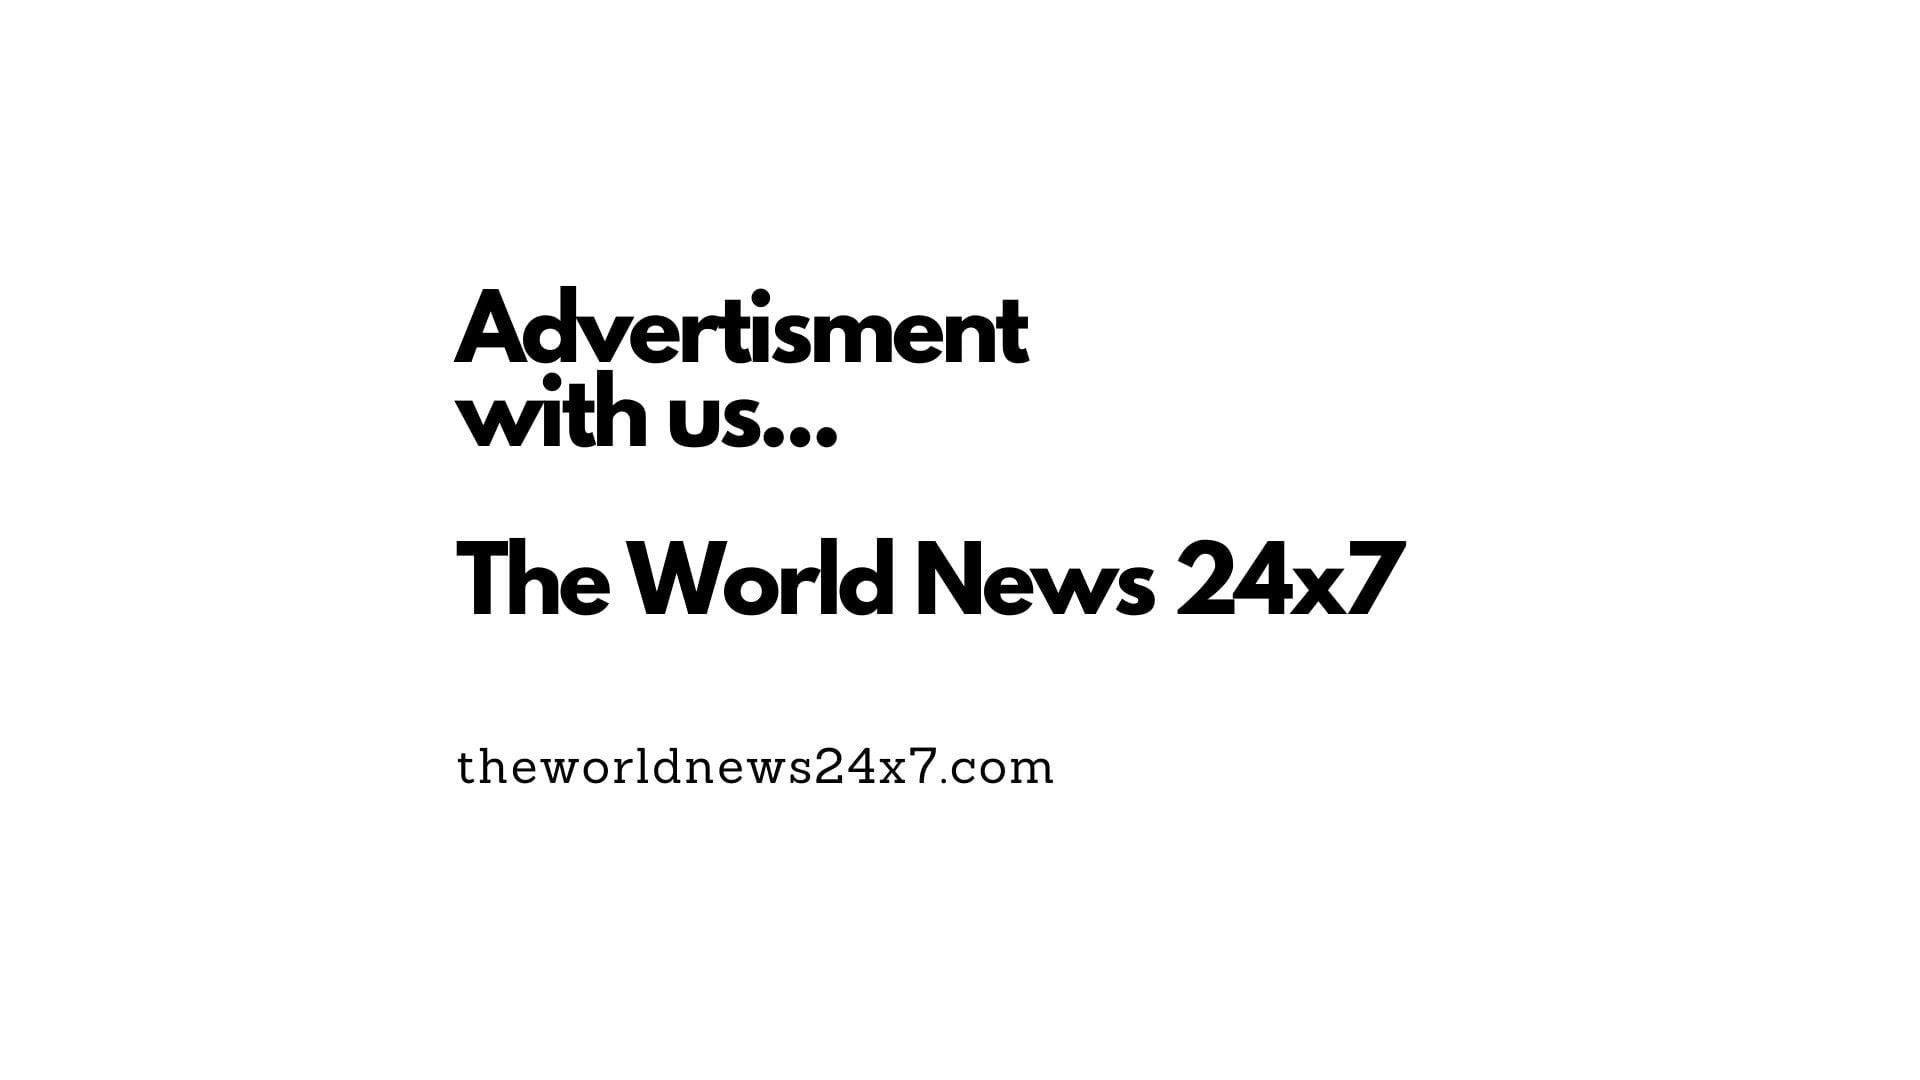 TheWorldNews24x7